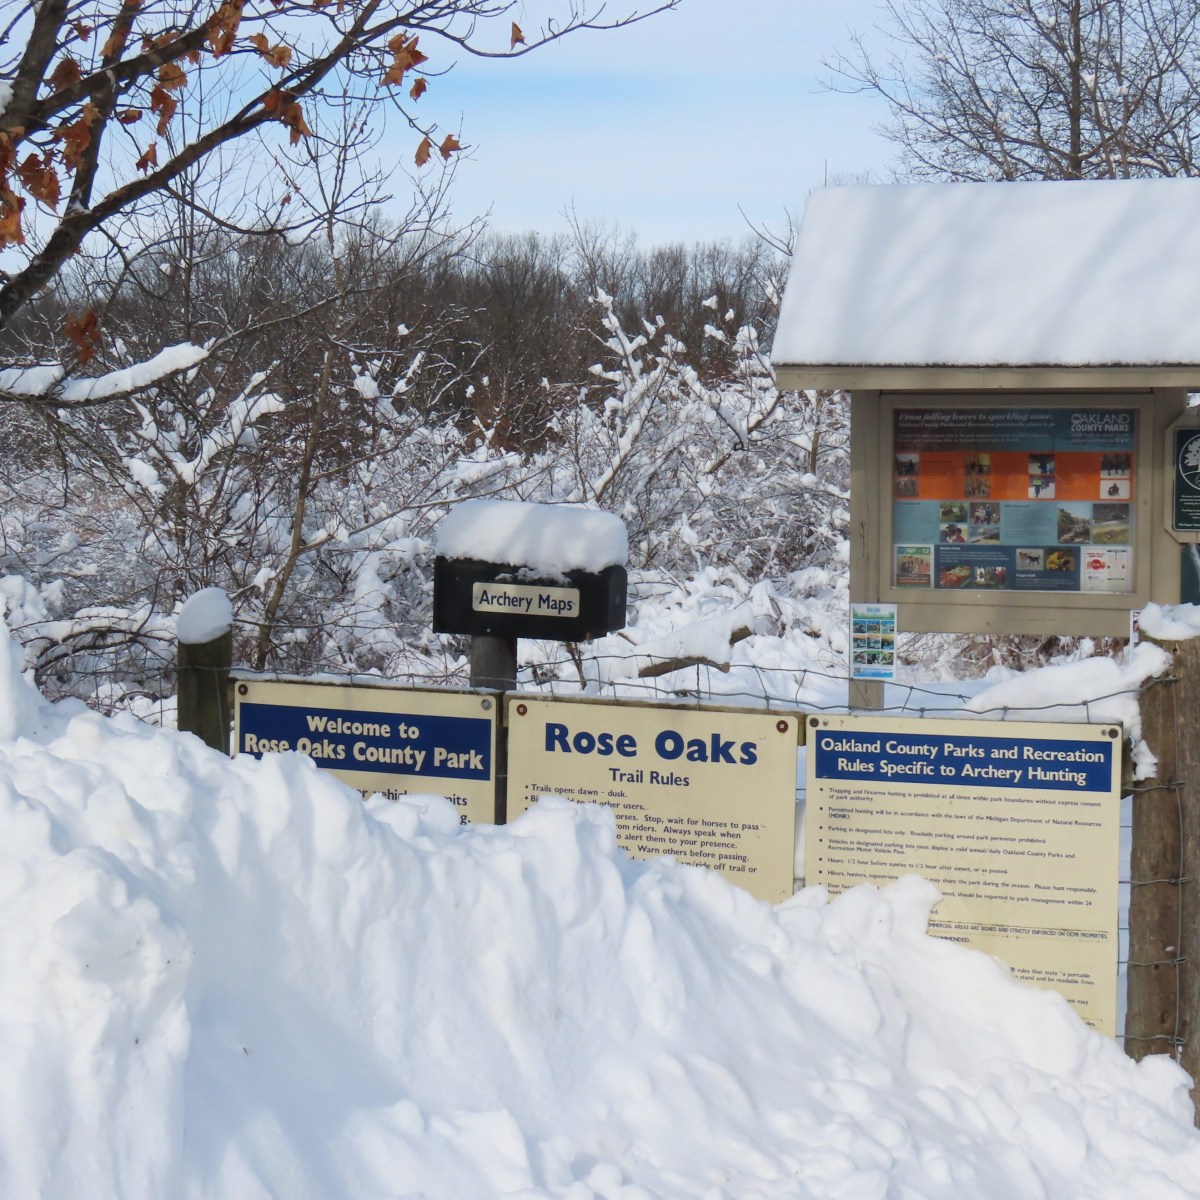 Trail entrance at Rose Oaks County Park